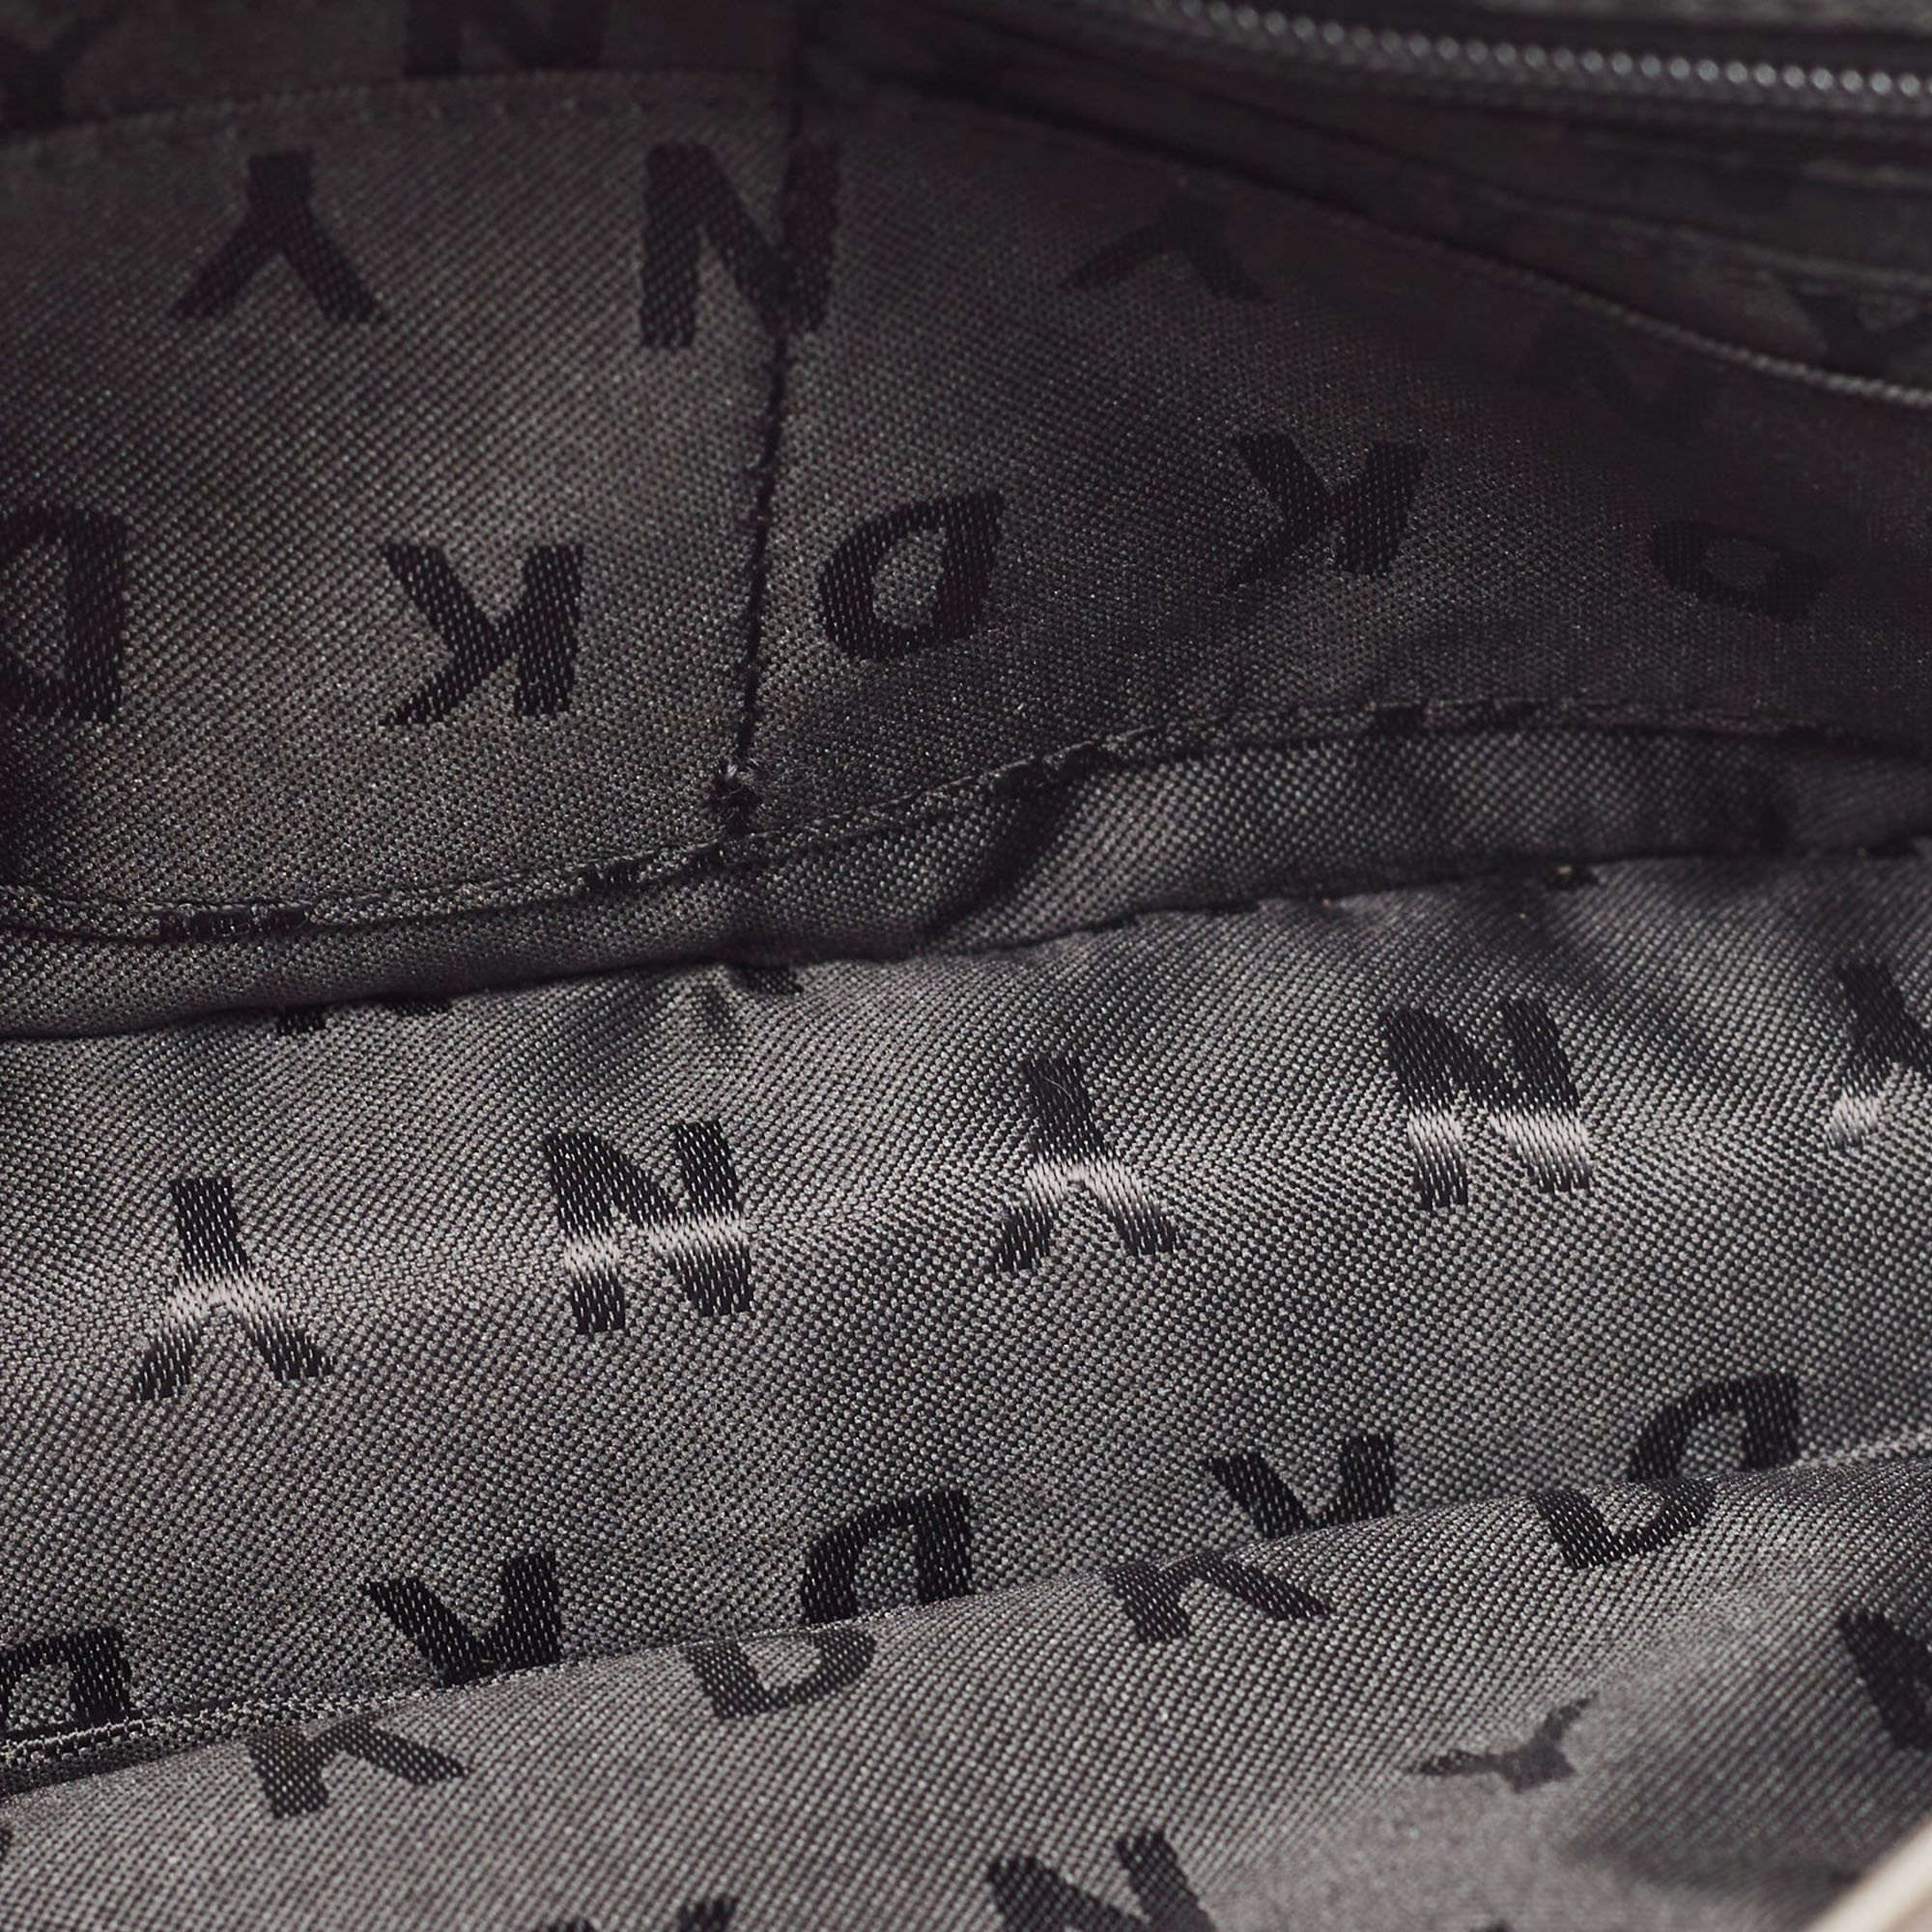 DKNY Grey Leather Pushlock Flap Shoulder Bag